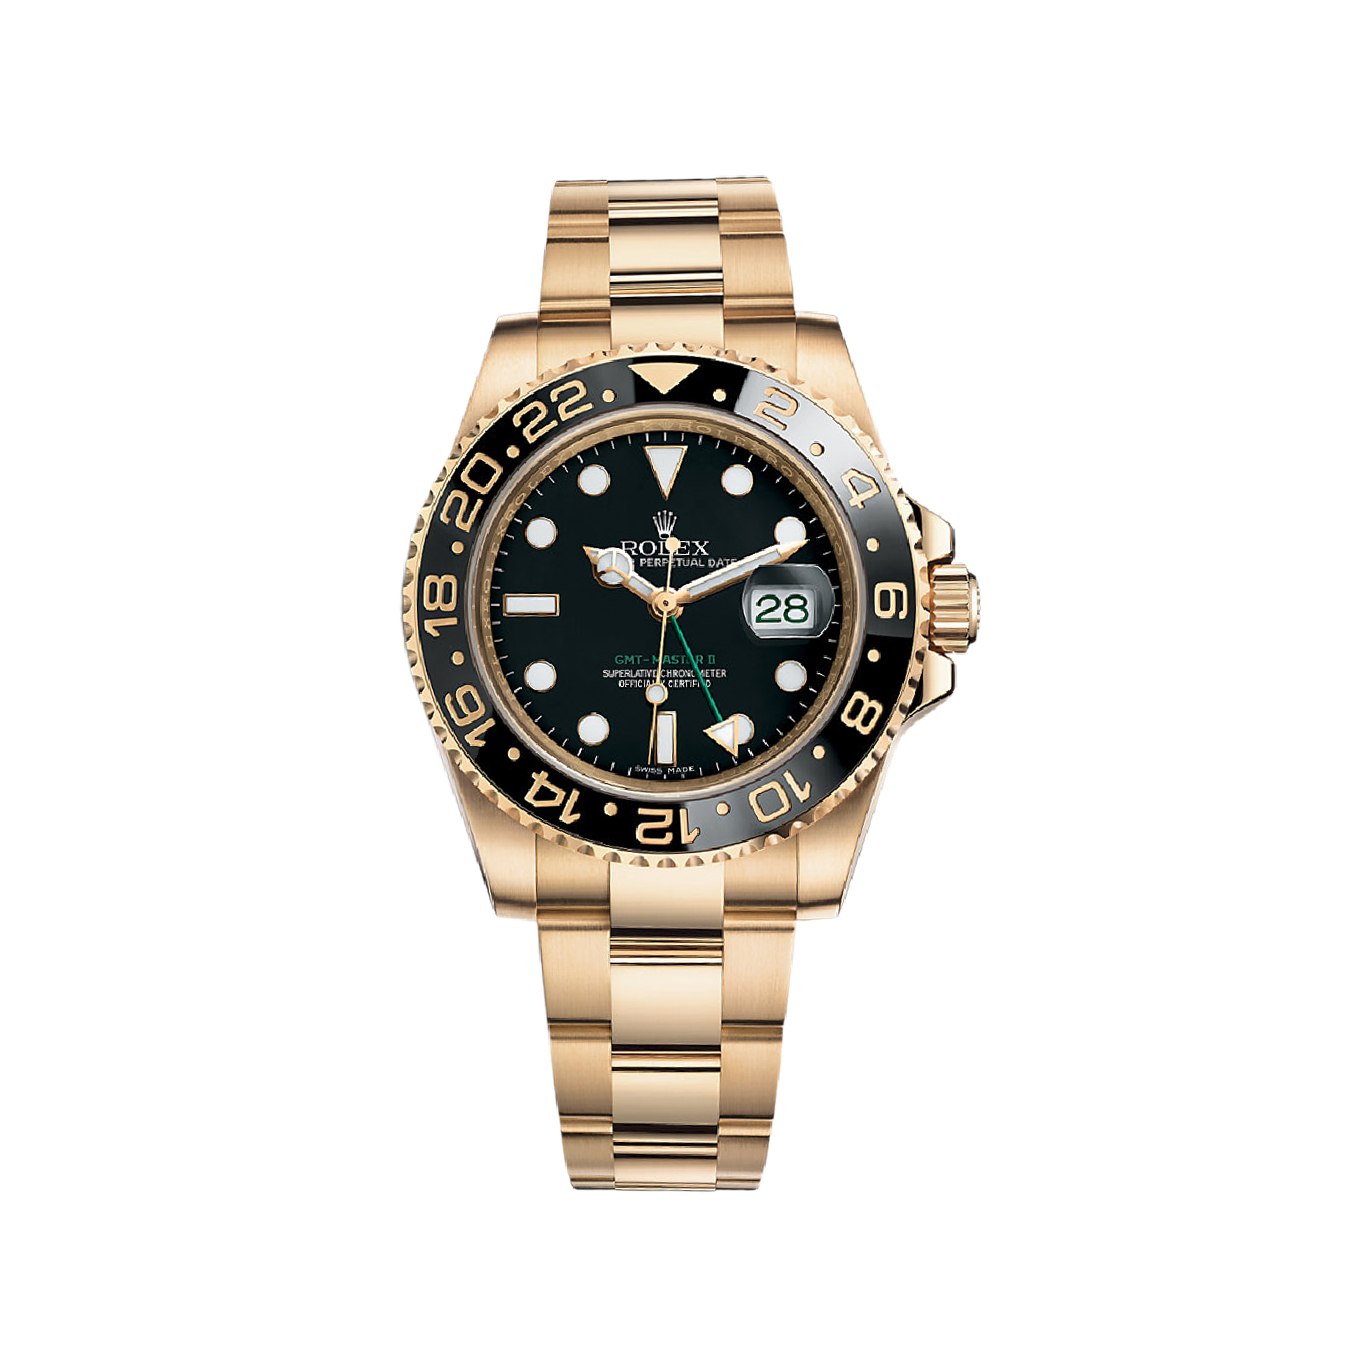 GMT-Master II 116718LN Gold Watch (Black)